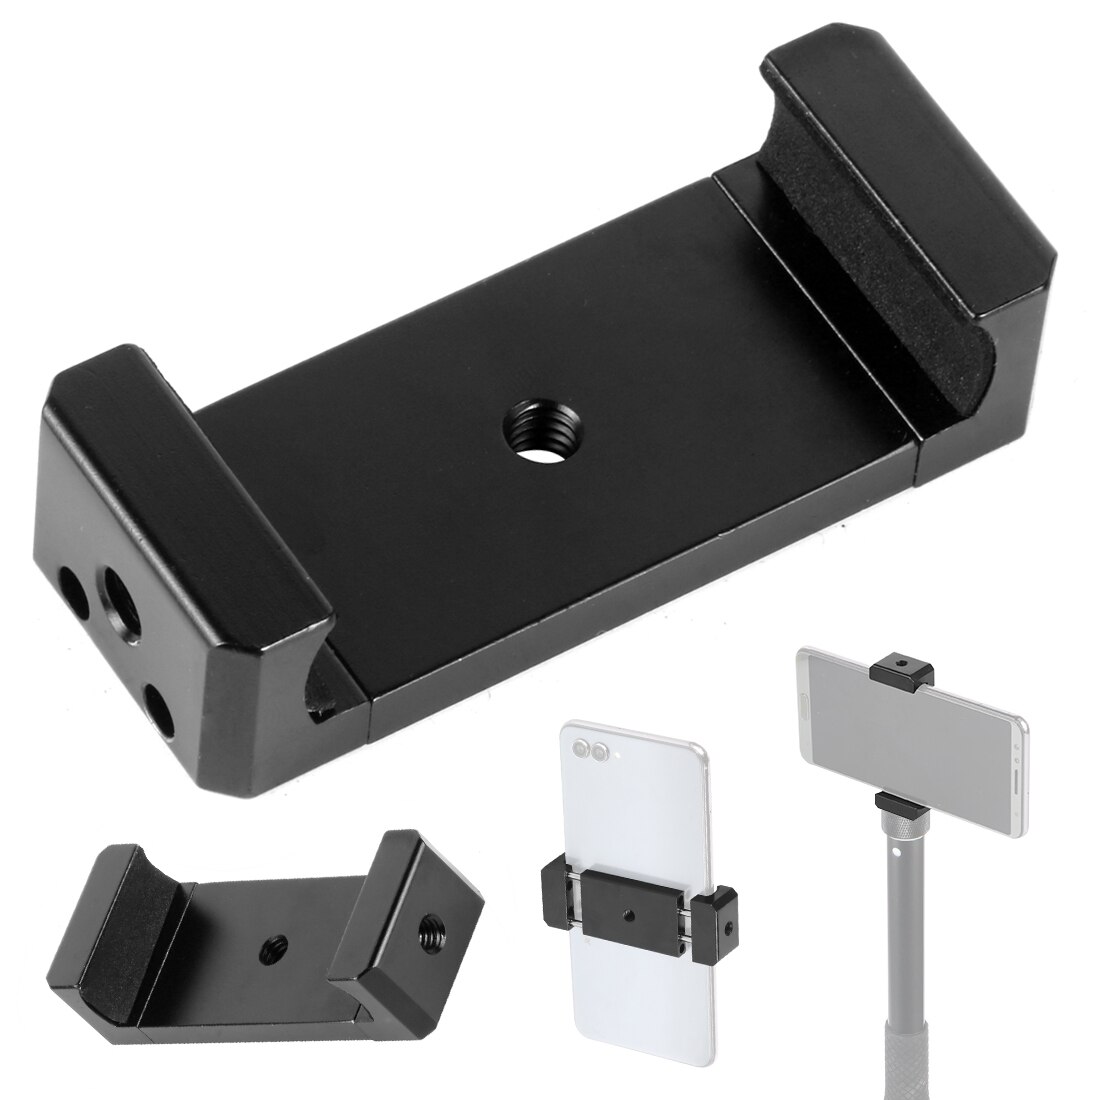 Selfie Stick Tripod phone tripod mount Head Bracket Mobile Phone Holder Clip For Phone Flashlight Microphone With Spirit level: 3x Screw Holes